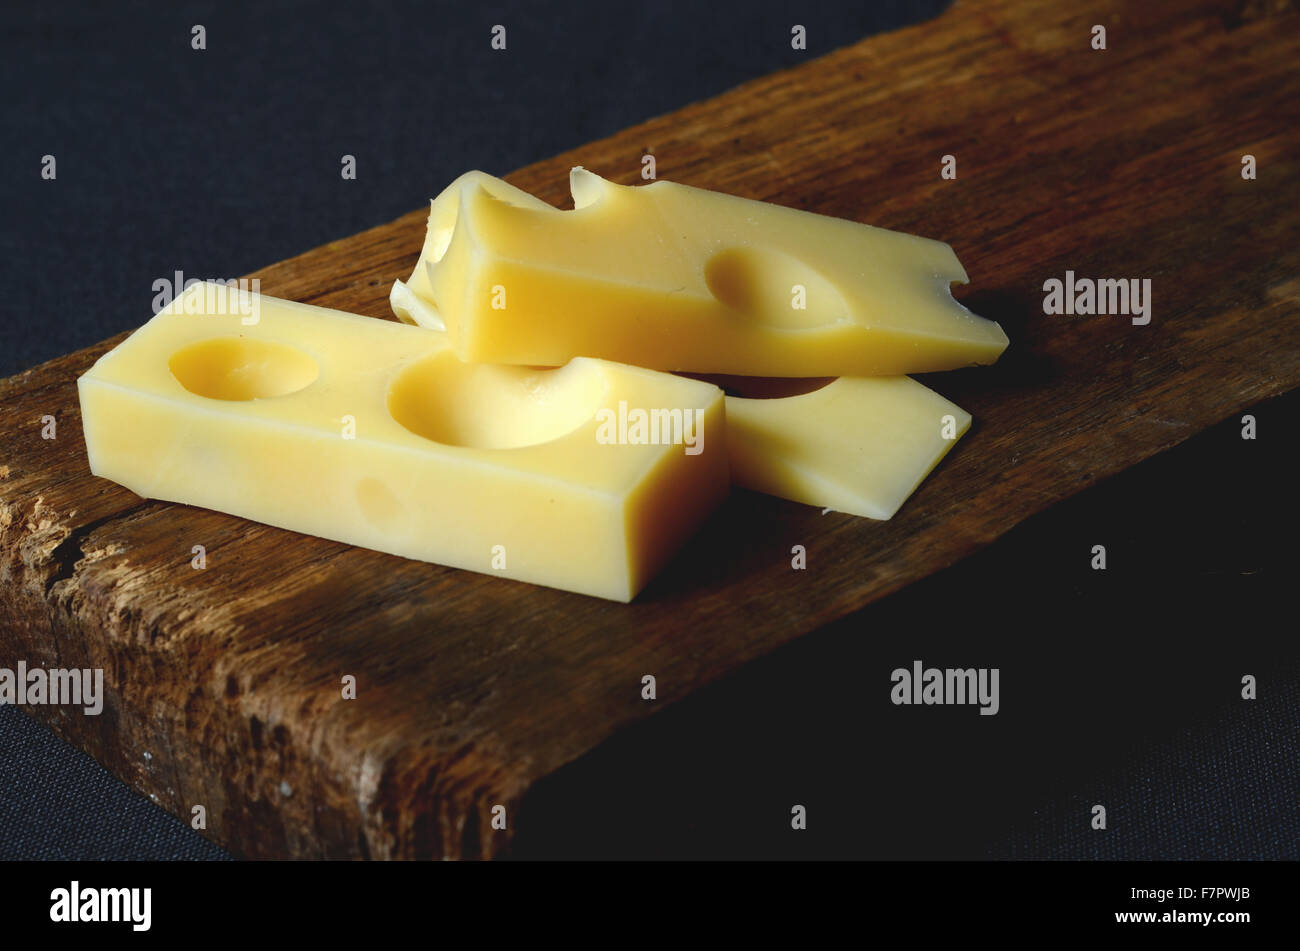 Trozos y lonchas de queso emmental fresco Foto de stock